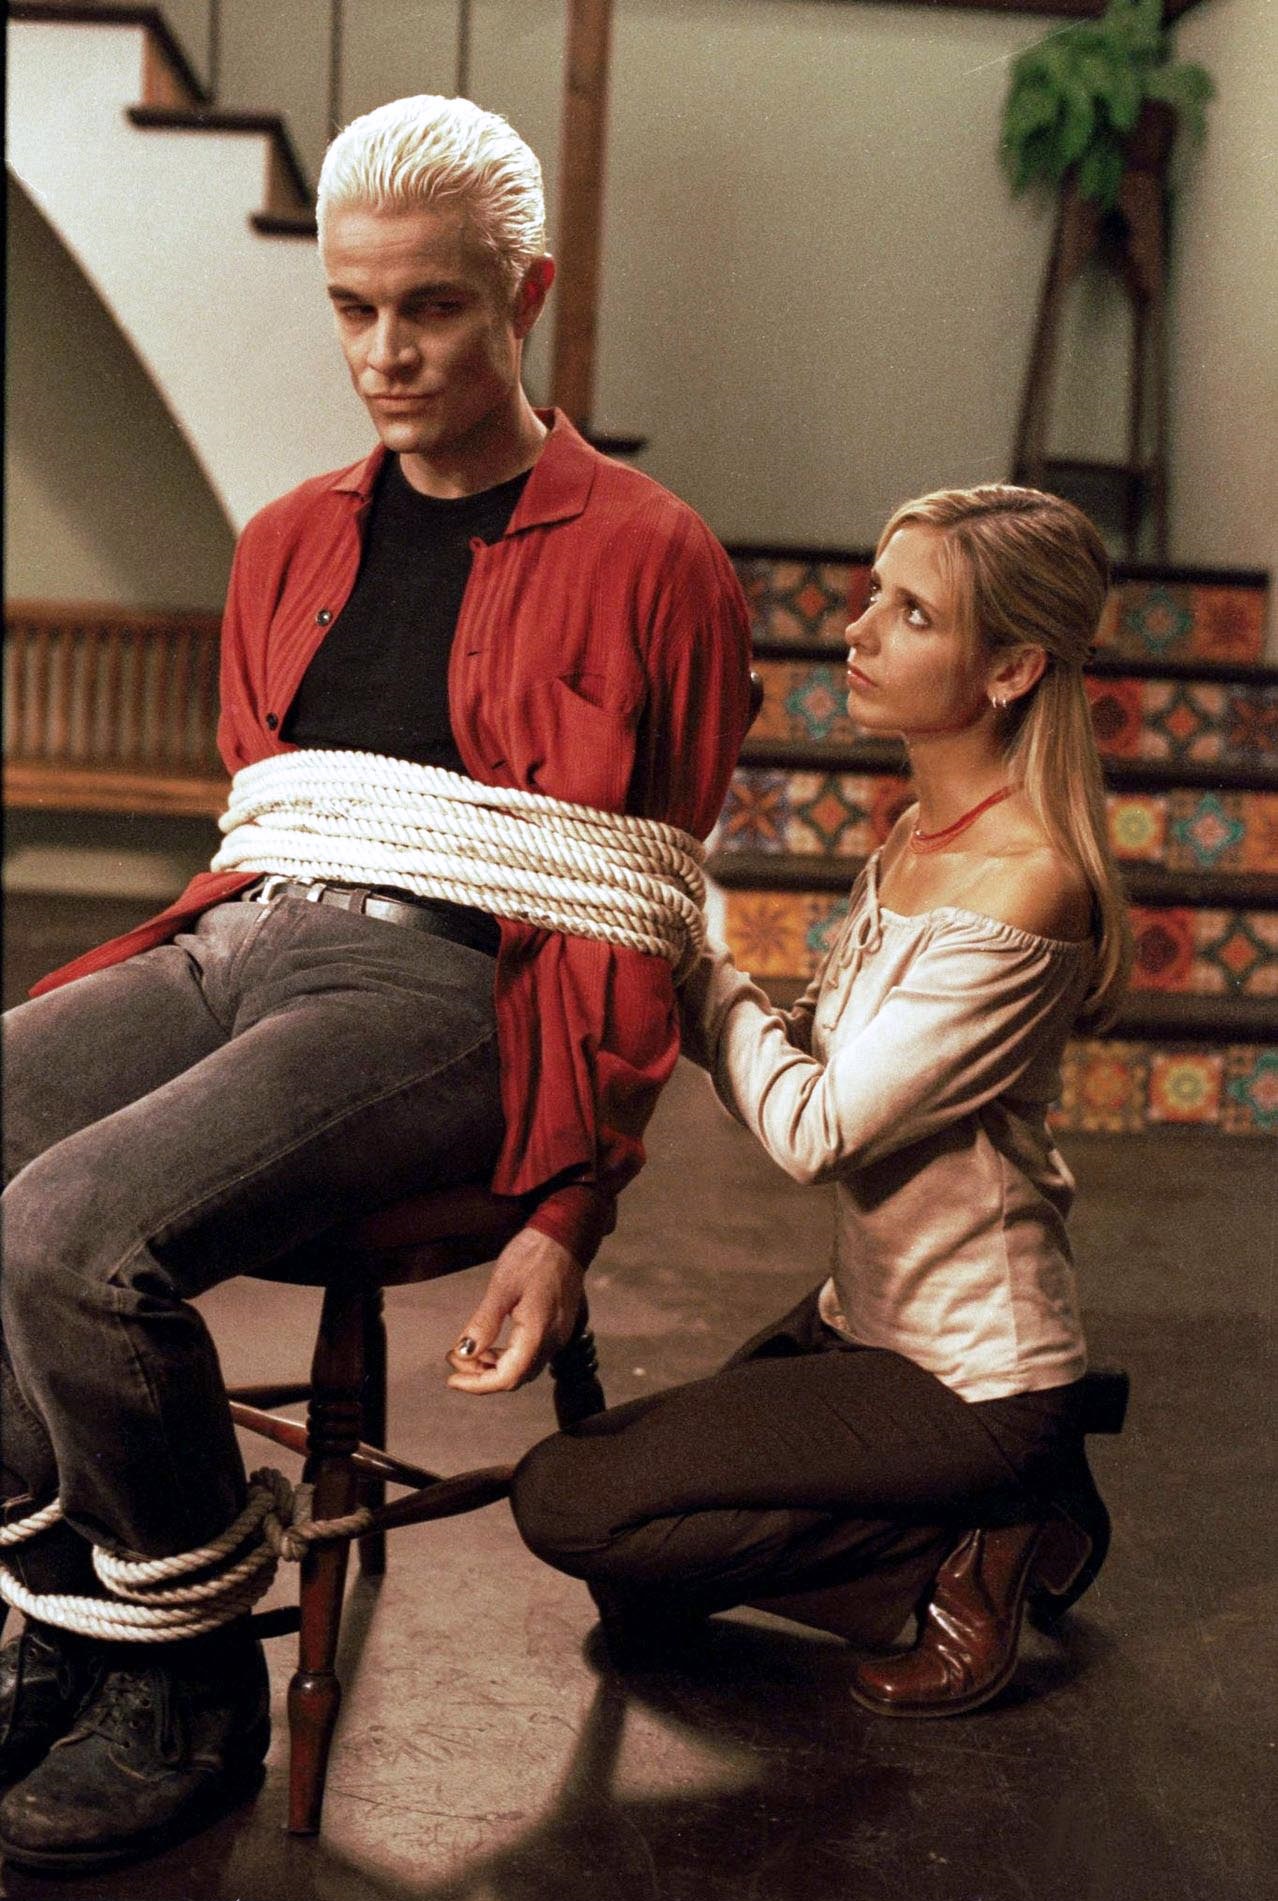 Buffy Vampire Slayer: Season 4 [DVD]